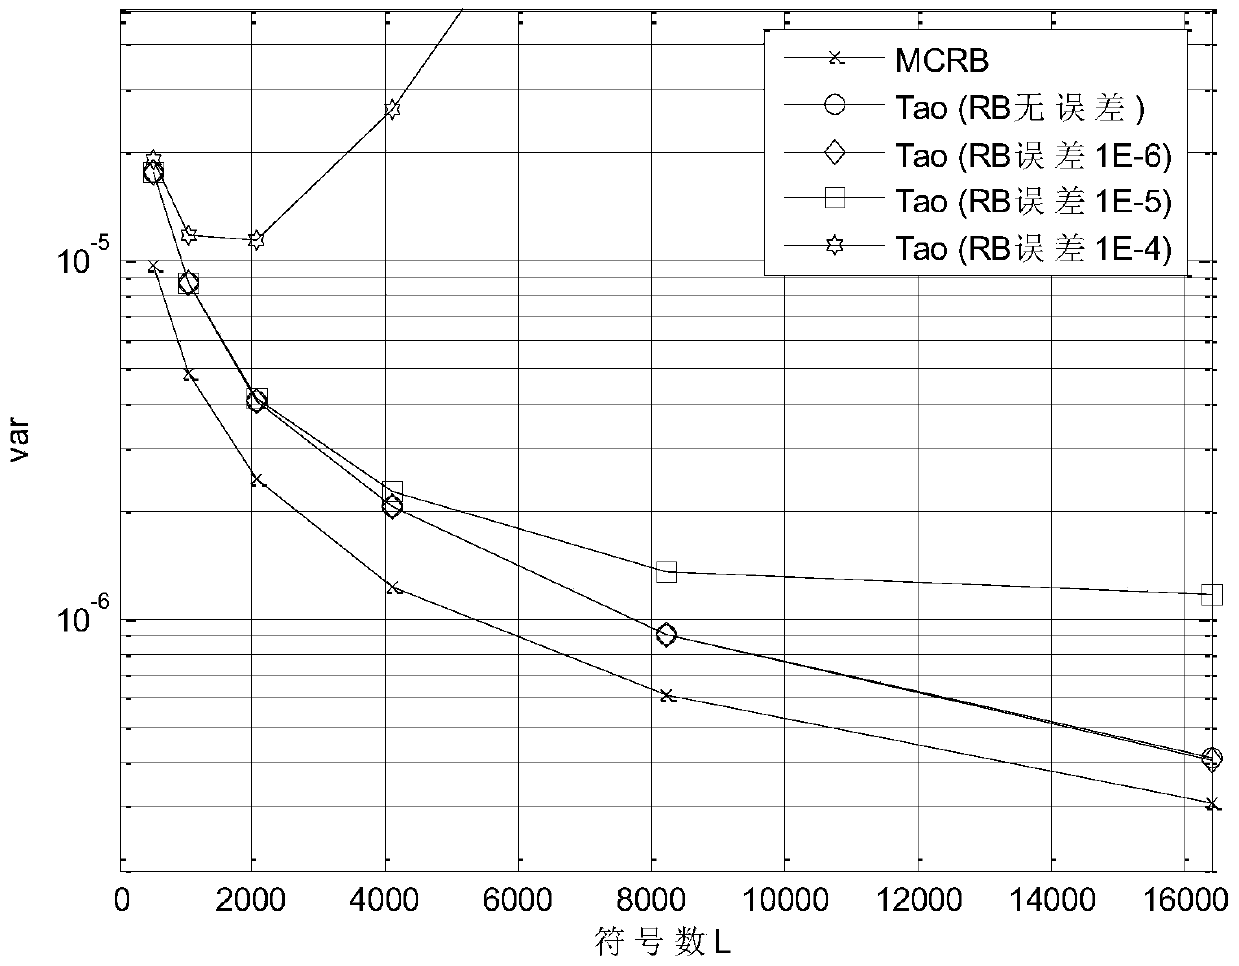 Estimation Method of Subtle Baud Rate Characteristics Based on Progressive Precision Timing Estimation